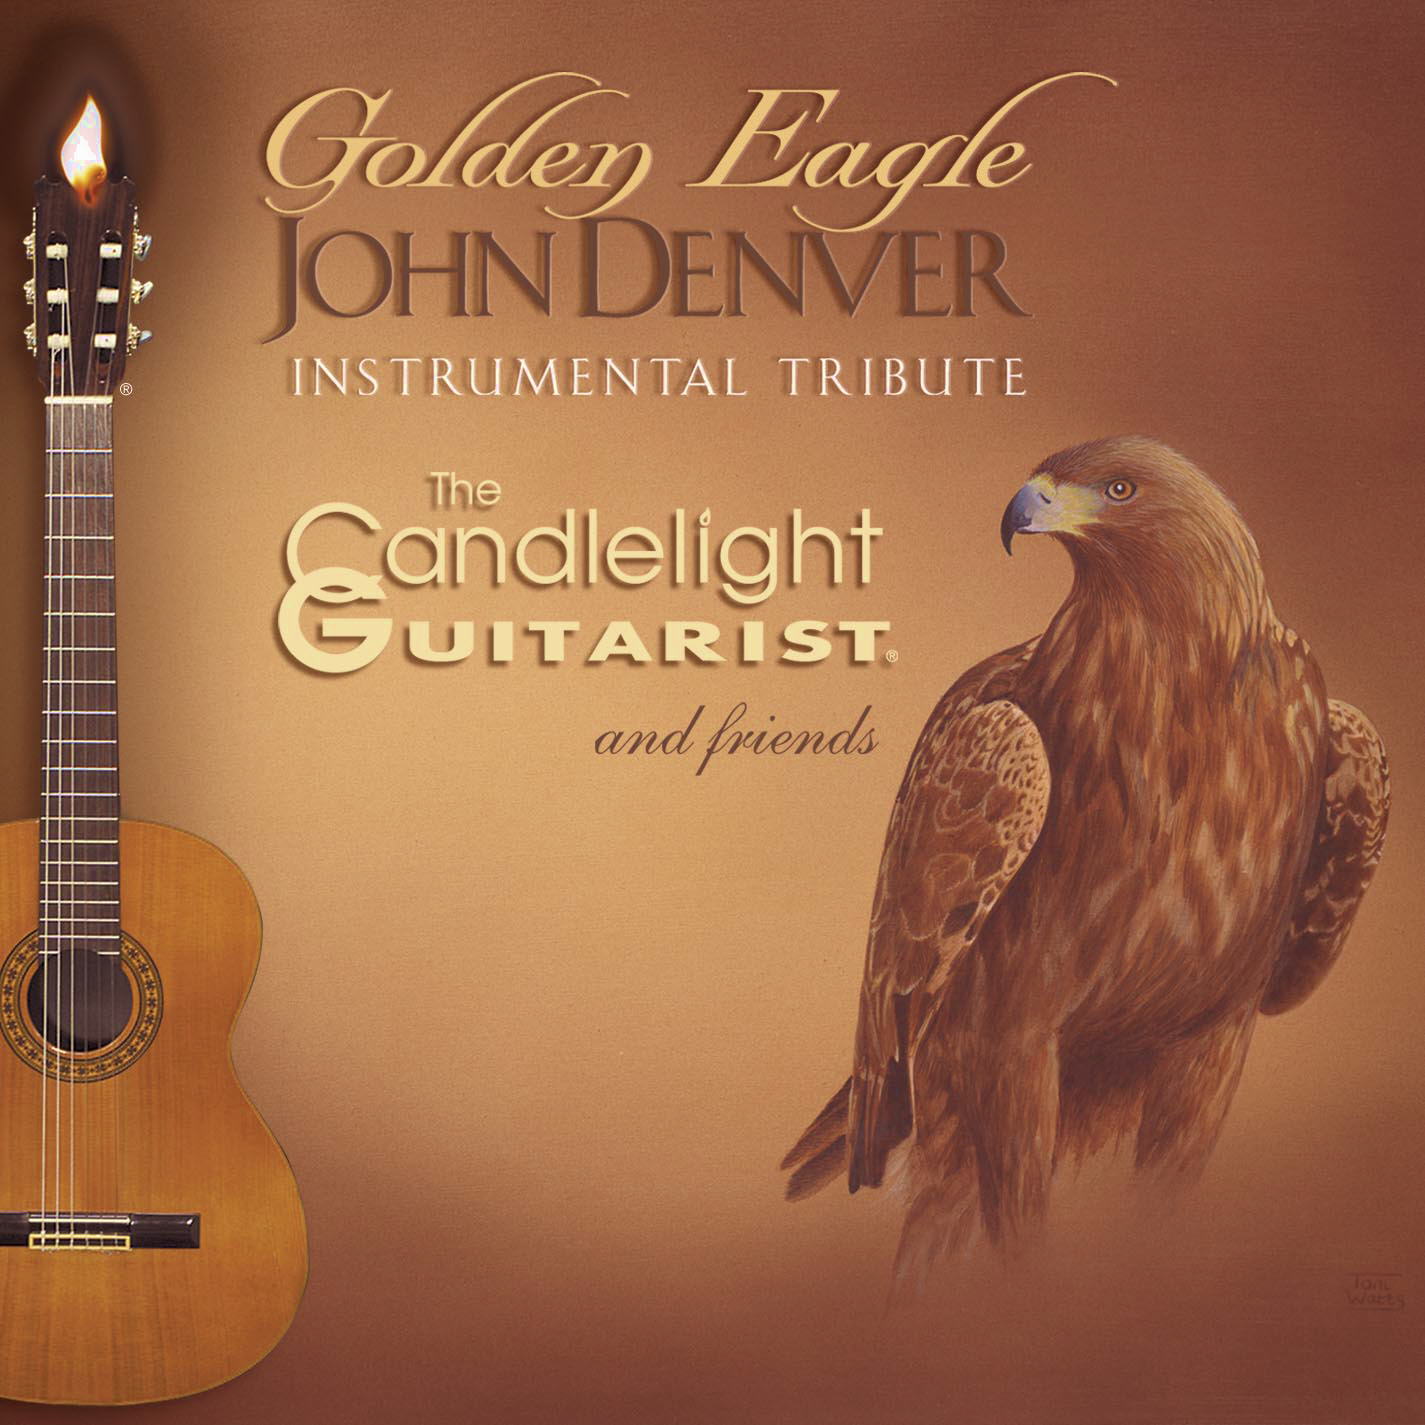 Golden Eagle: JOHN DENVER Instrumental Tribute CD